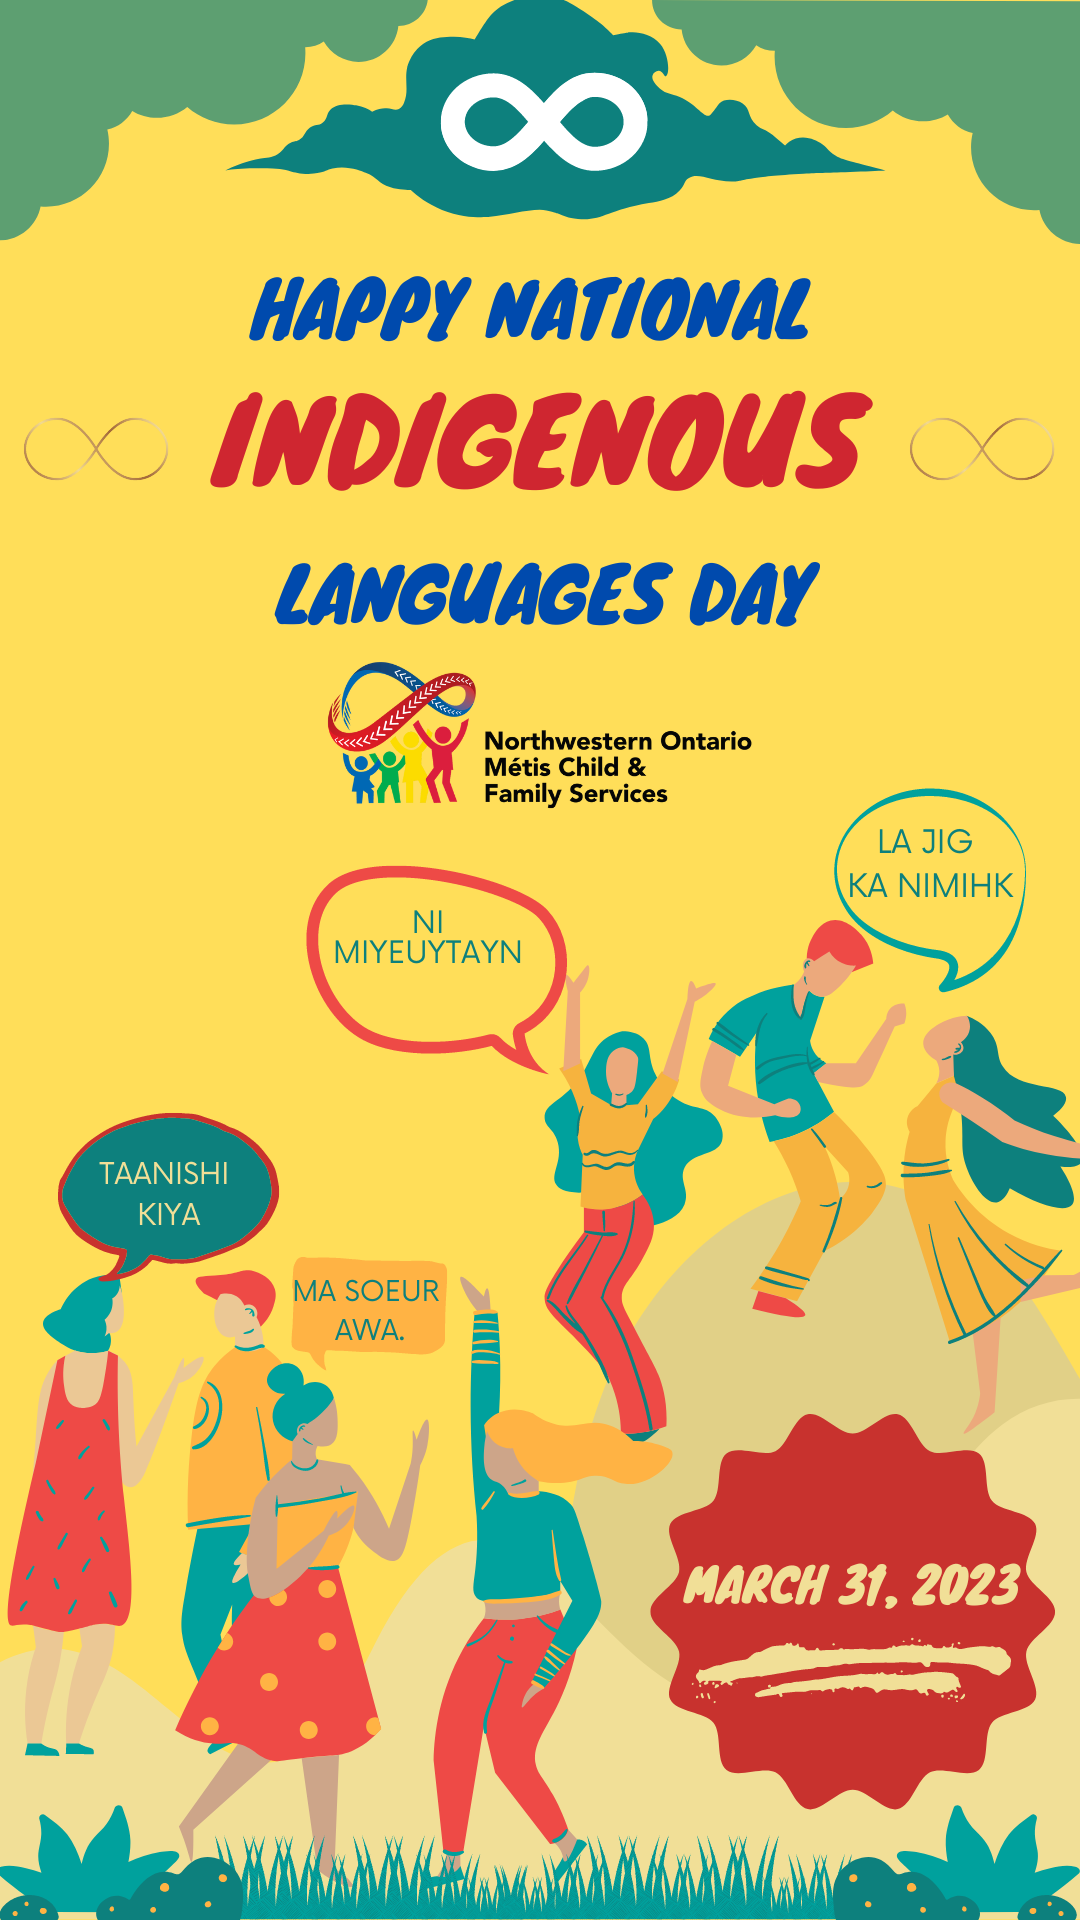 Happy National Indigenous Languages Day Northwestern Ontario Métis